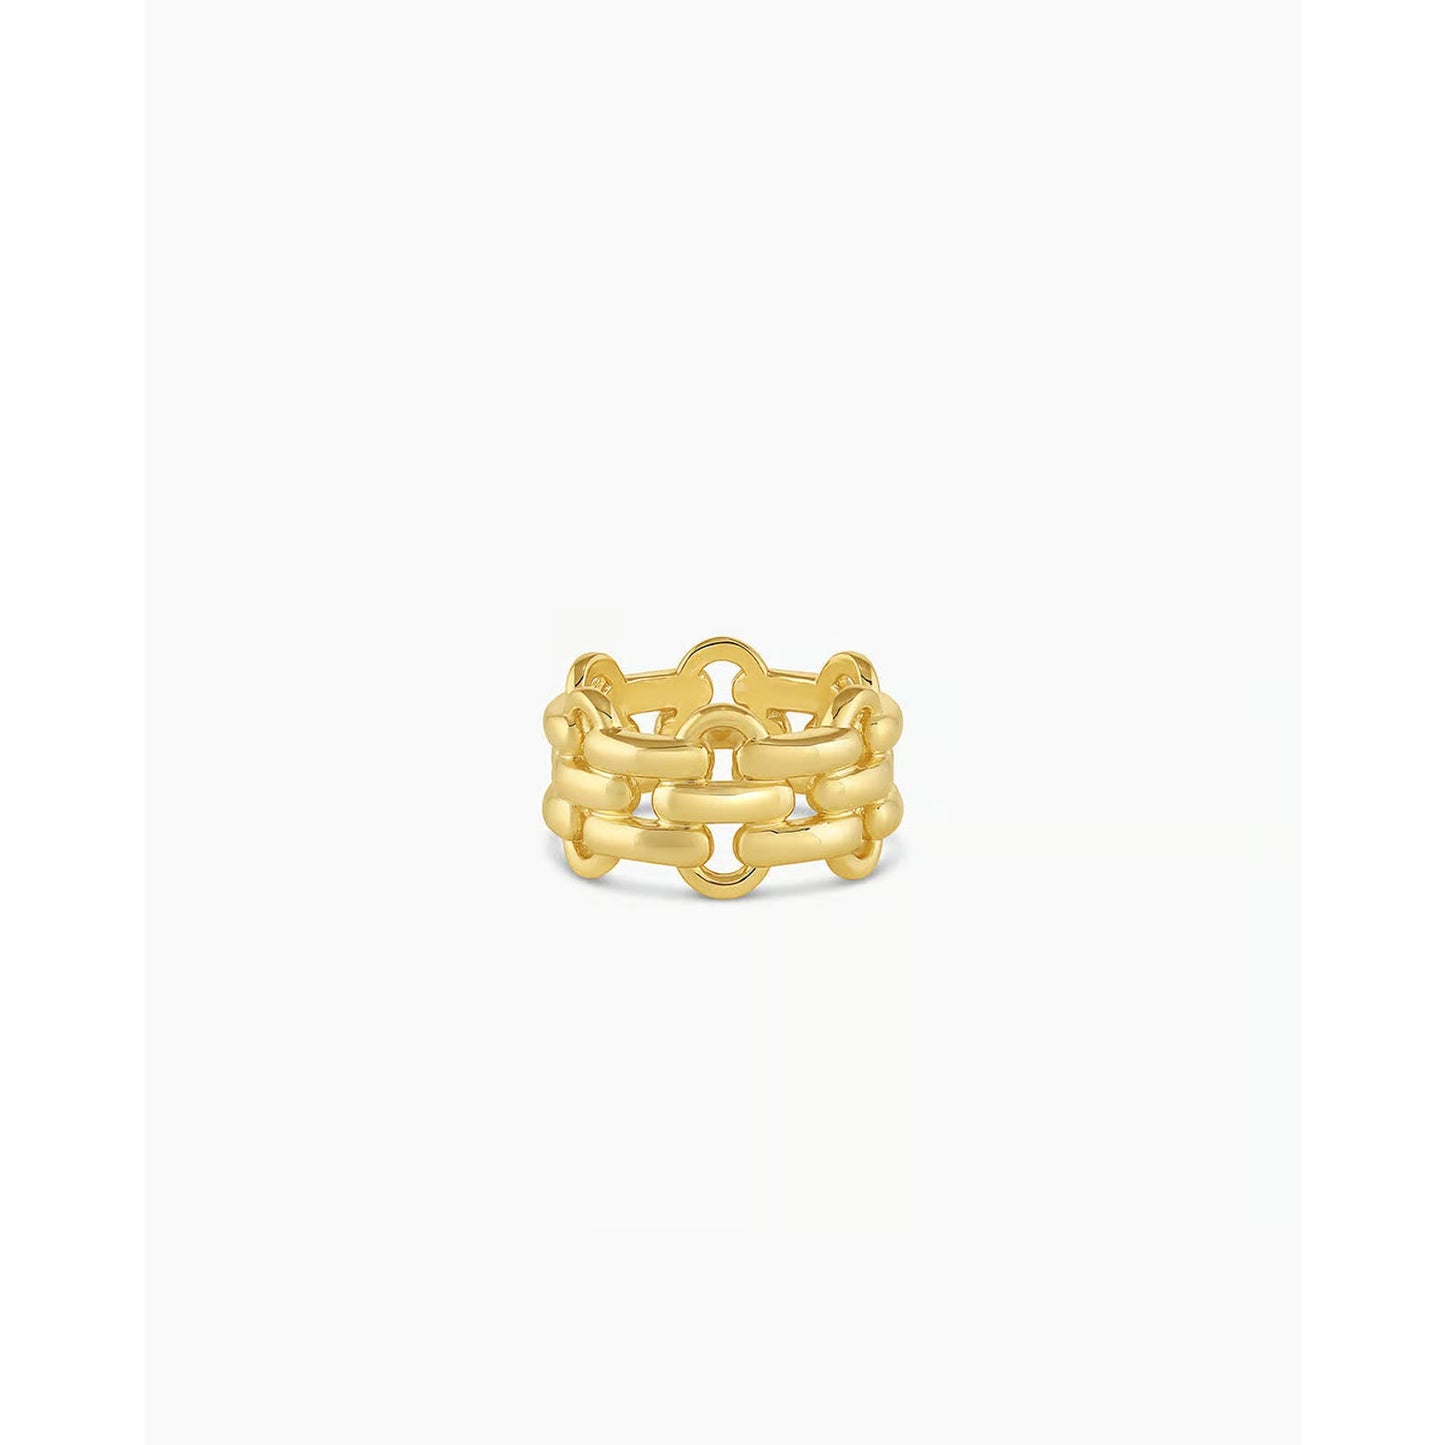 Gorjana Brooklyn Statement Ring 18k Gold Plated Chain Link Design Jewelry Size 8